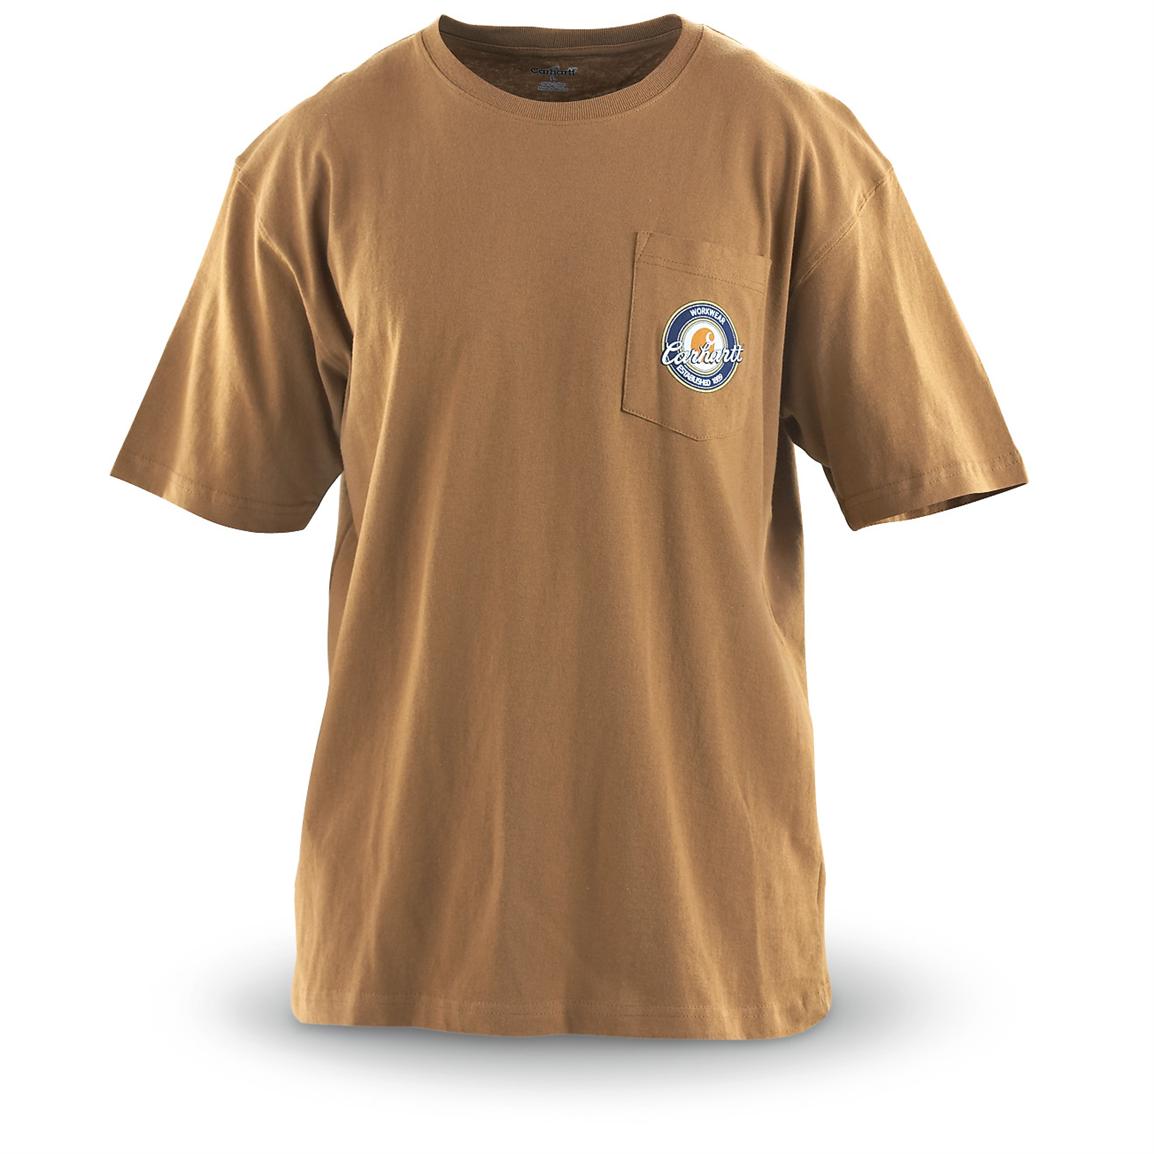 Download 2 Carhartt® Pocket T - shirts, 1 Brown / 1 Heather Gray ...